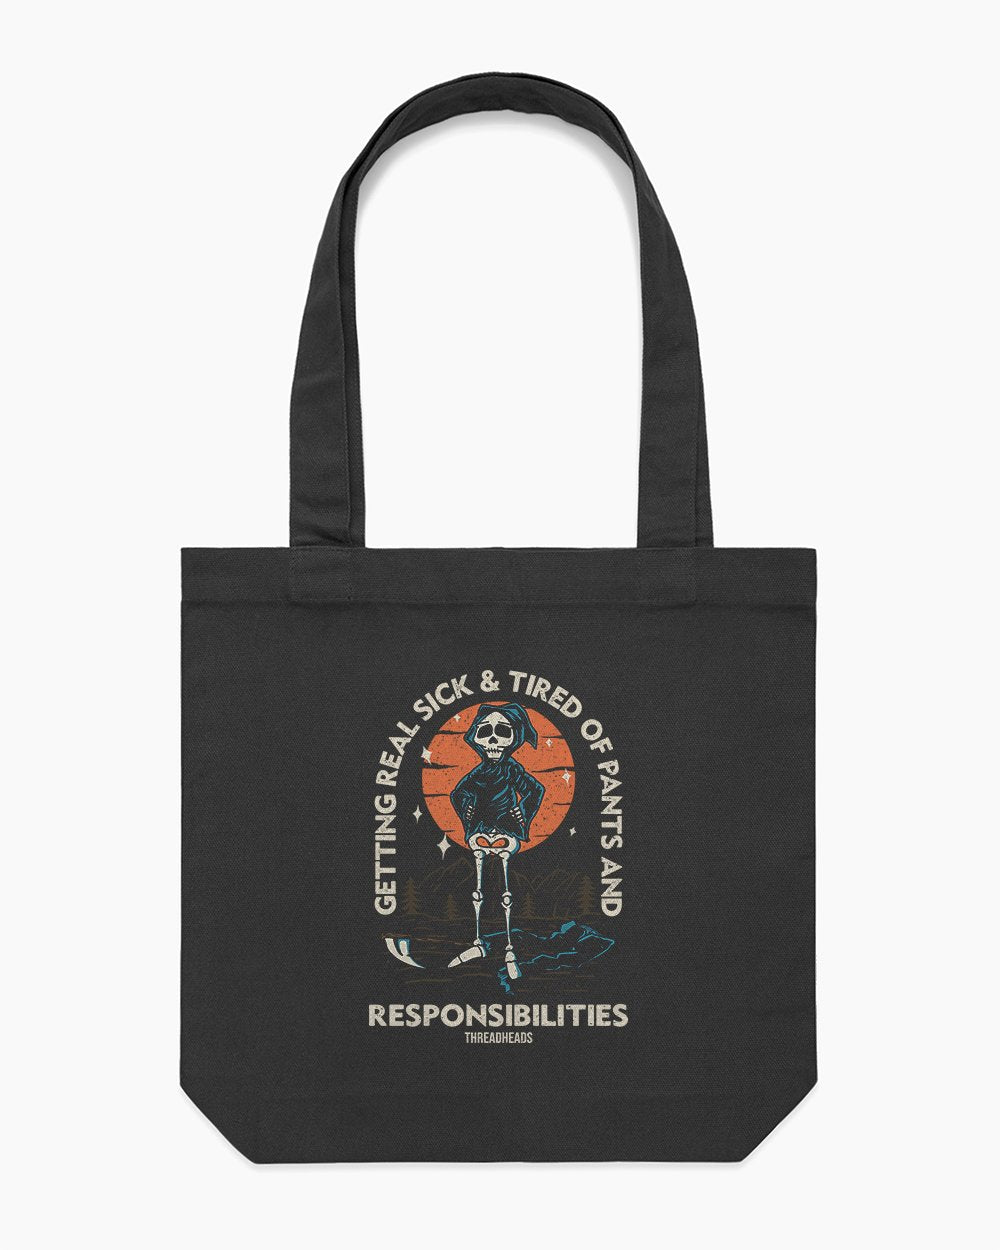 Pants and Responsibilities Tote Bag Australia Online #colour_